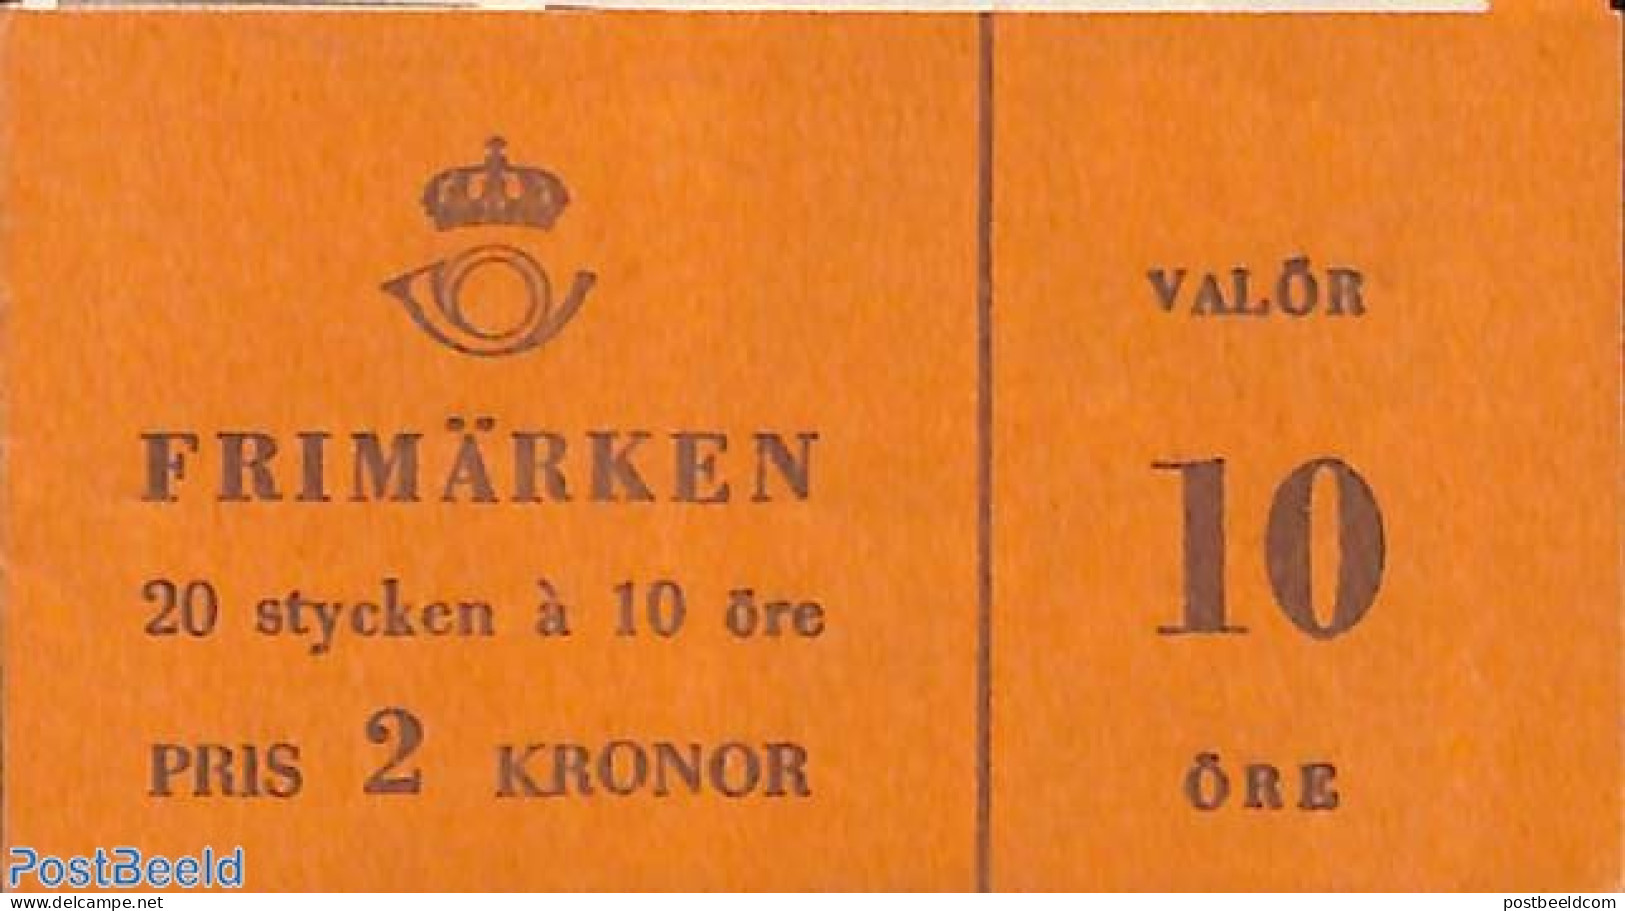 Sweden 1954 20x 10ö Booklet, Mint NH, Stamp Booklets - Neufs